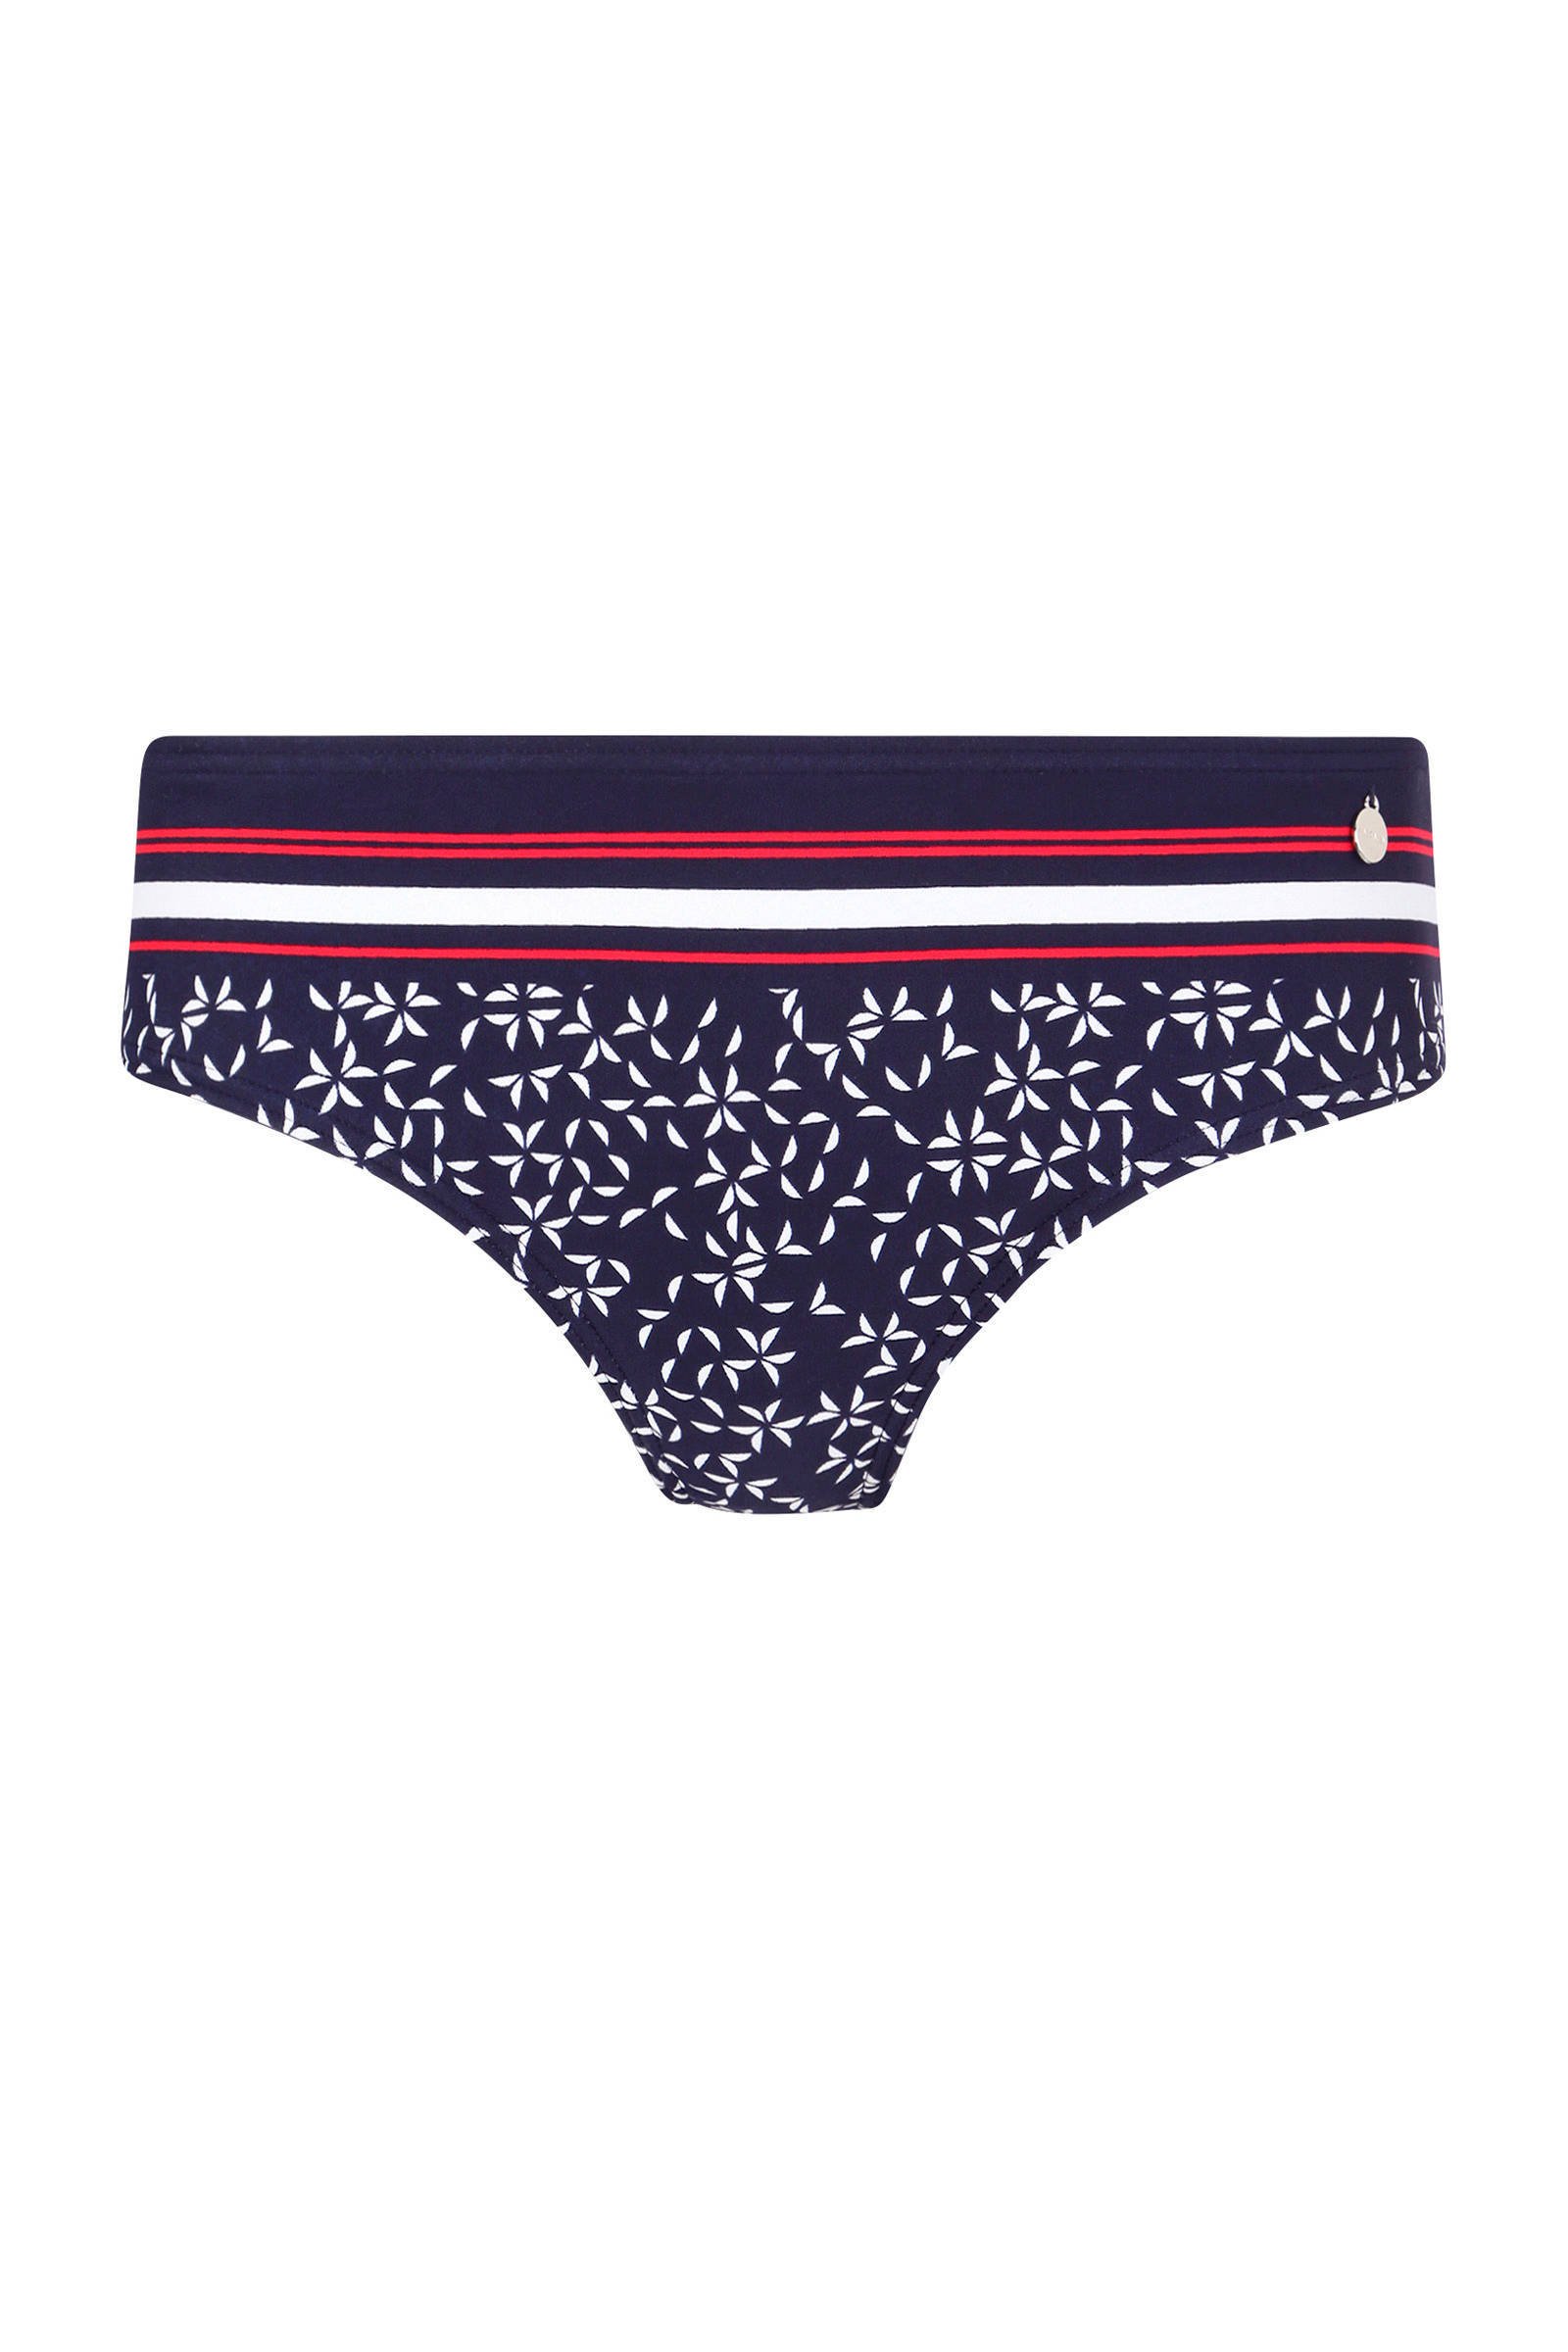 Lascana bikinibroekje met all over print donkerblauw/wit/rood online kopen